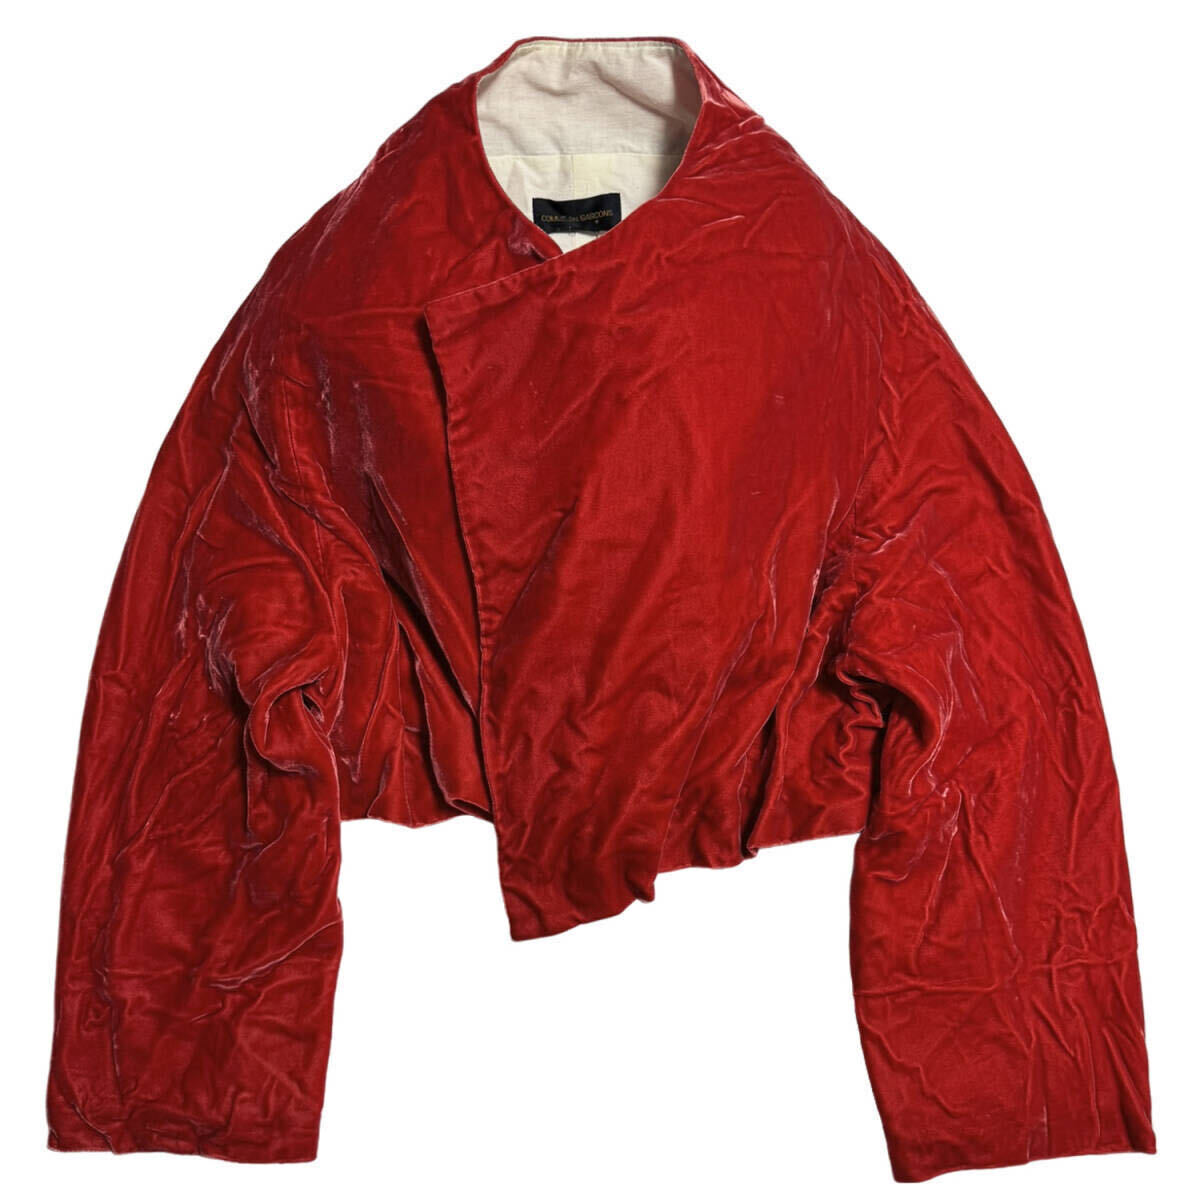 96AW ベルベット ボレロ ラップ ジャケット 赤 レッド COMME des GARCONS 1996AW AD1996 Velvet Bolero Wrap Jacket Red 薔薇と血 15SS_画像、説明文の転載・加工、編集利用禁止。